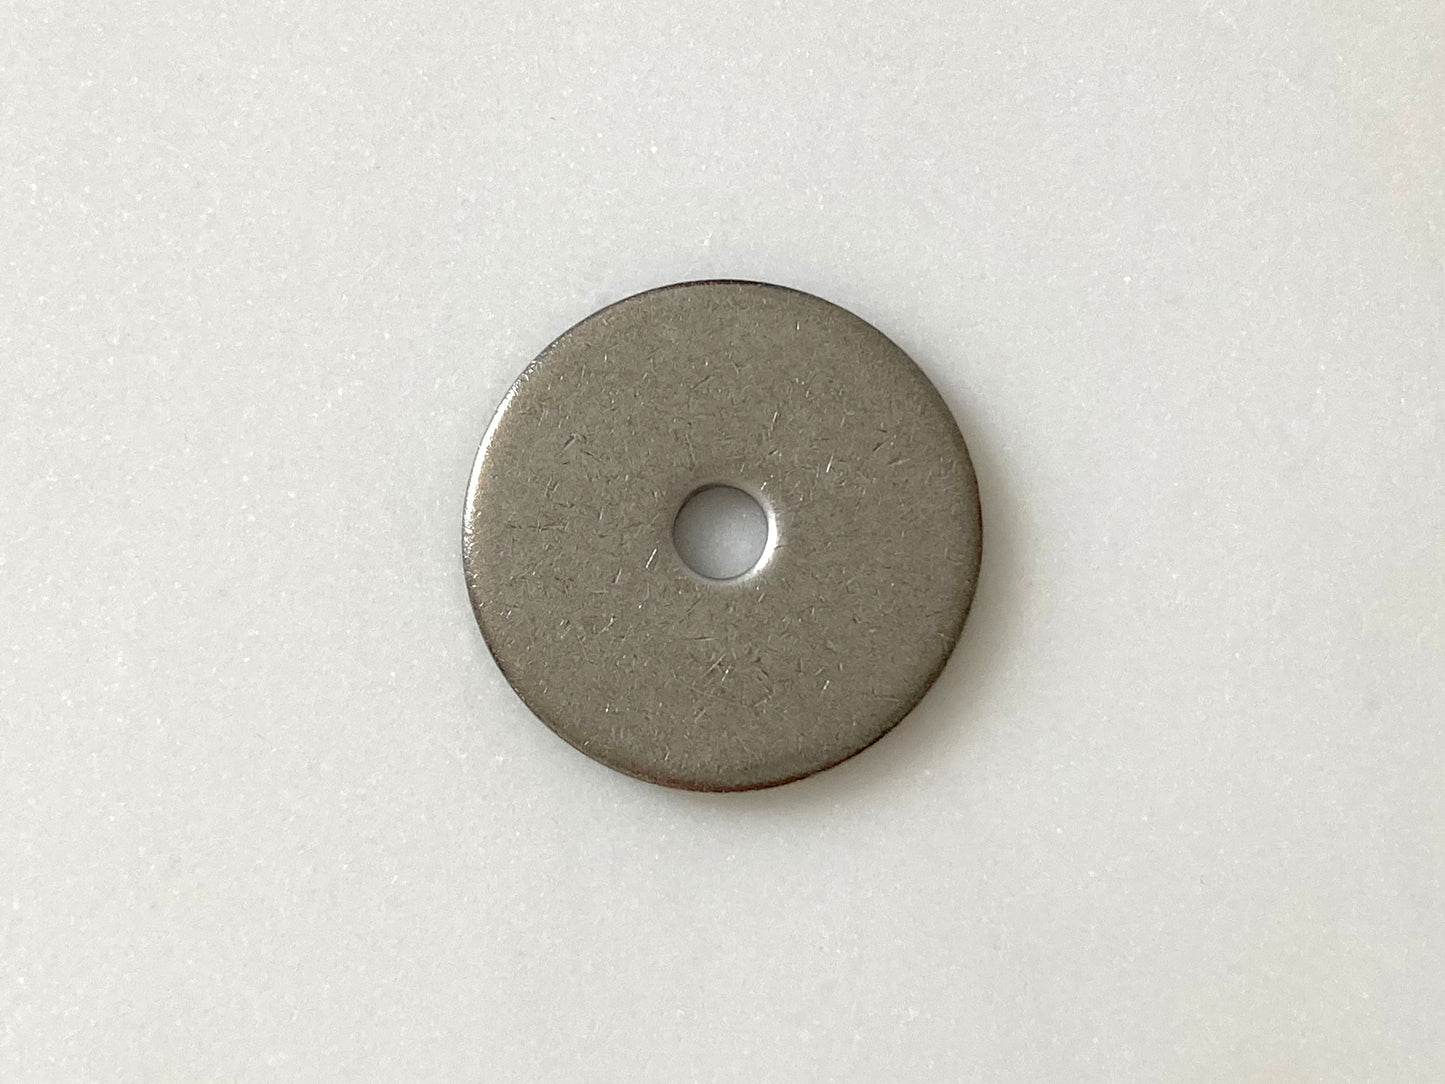 Backing Disc I Use for Yellow Diamond Wheel